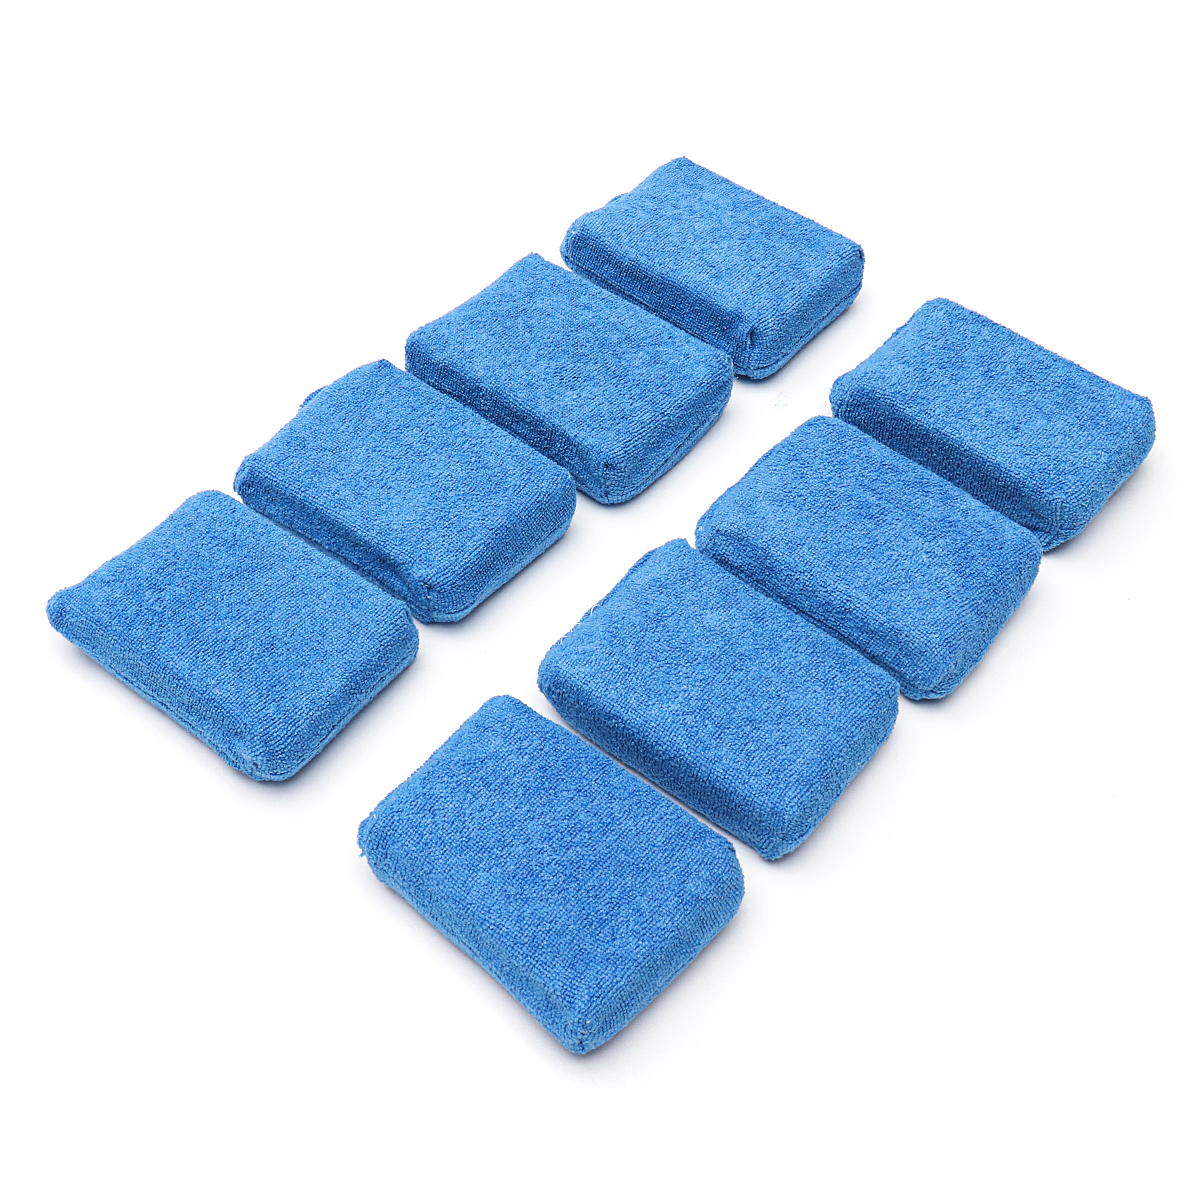 

8Pcs Blue Microfiber Applicator Cleaning Sponge Pads for Car Wash Wax Polishing Cleaning